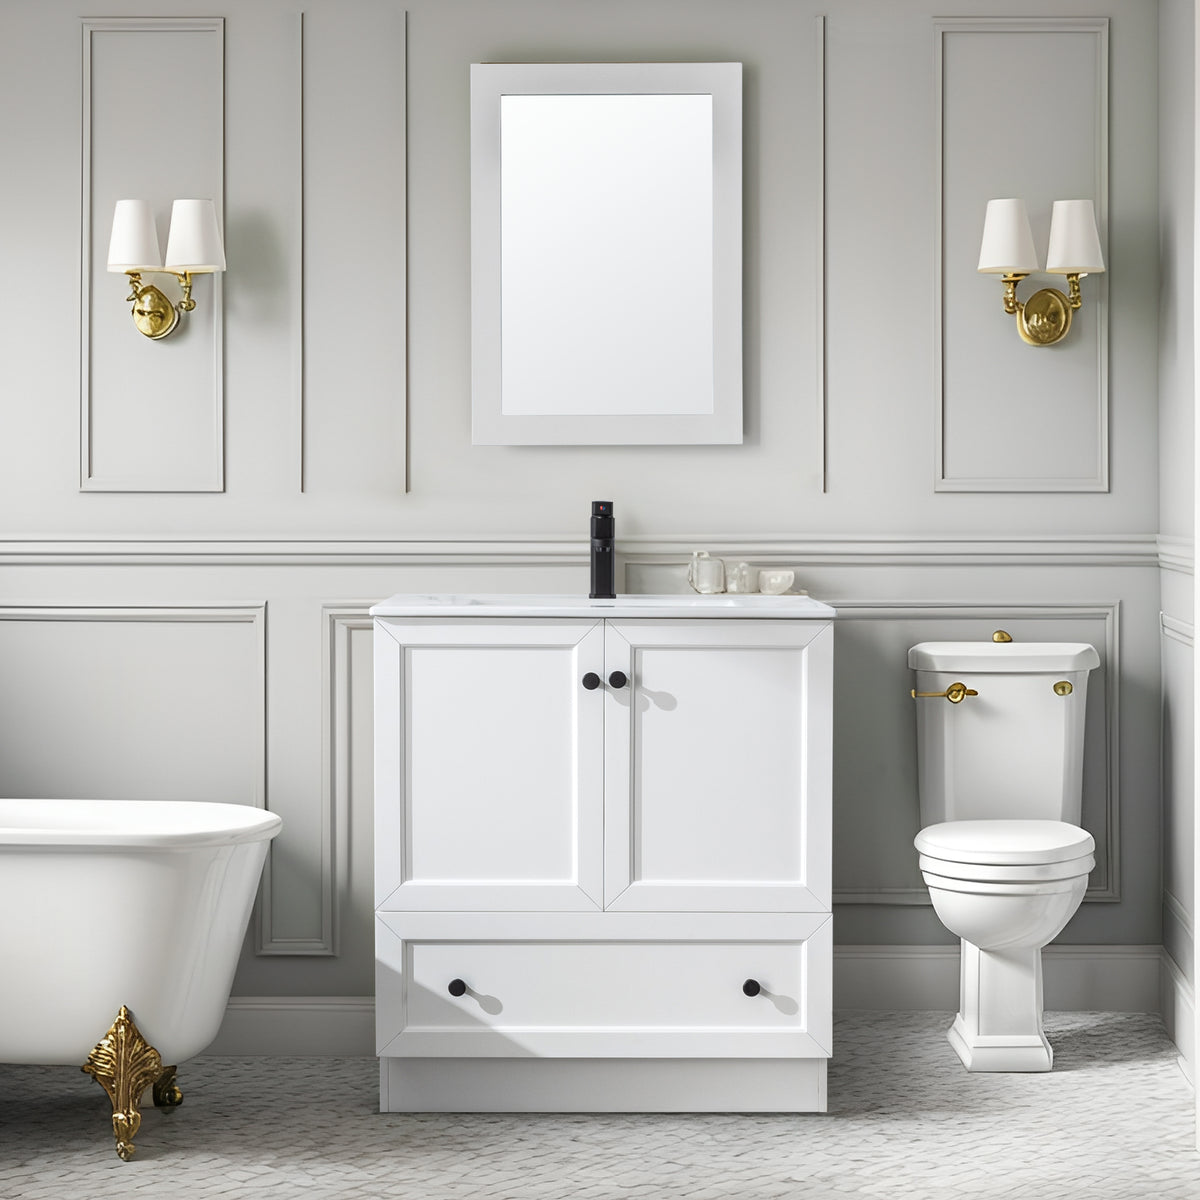 Kitchen Base 30" Freestanding Bathroom Vanity Combo with Single Undermount Sink